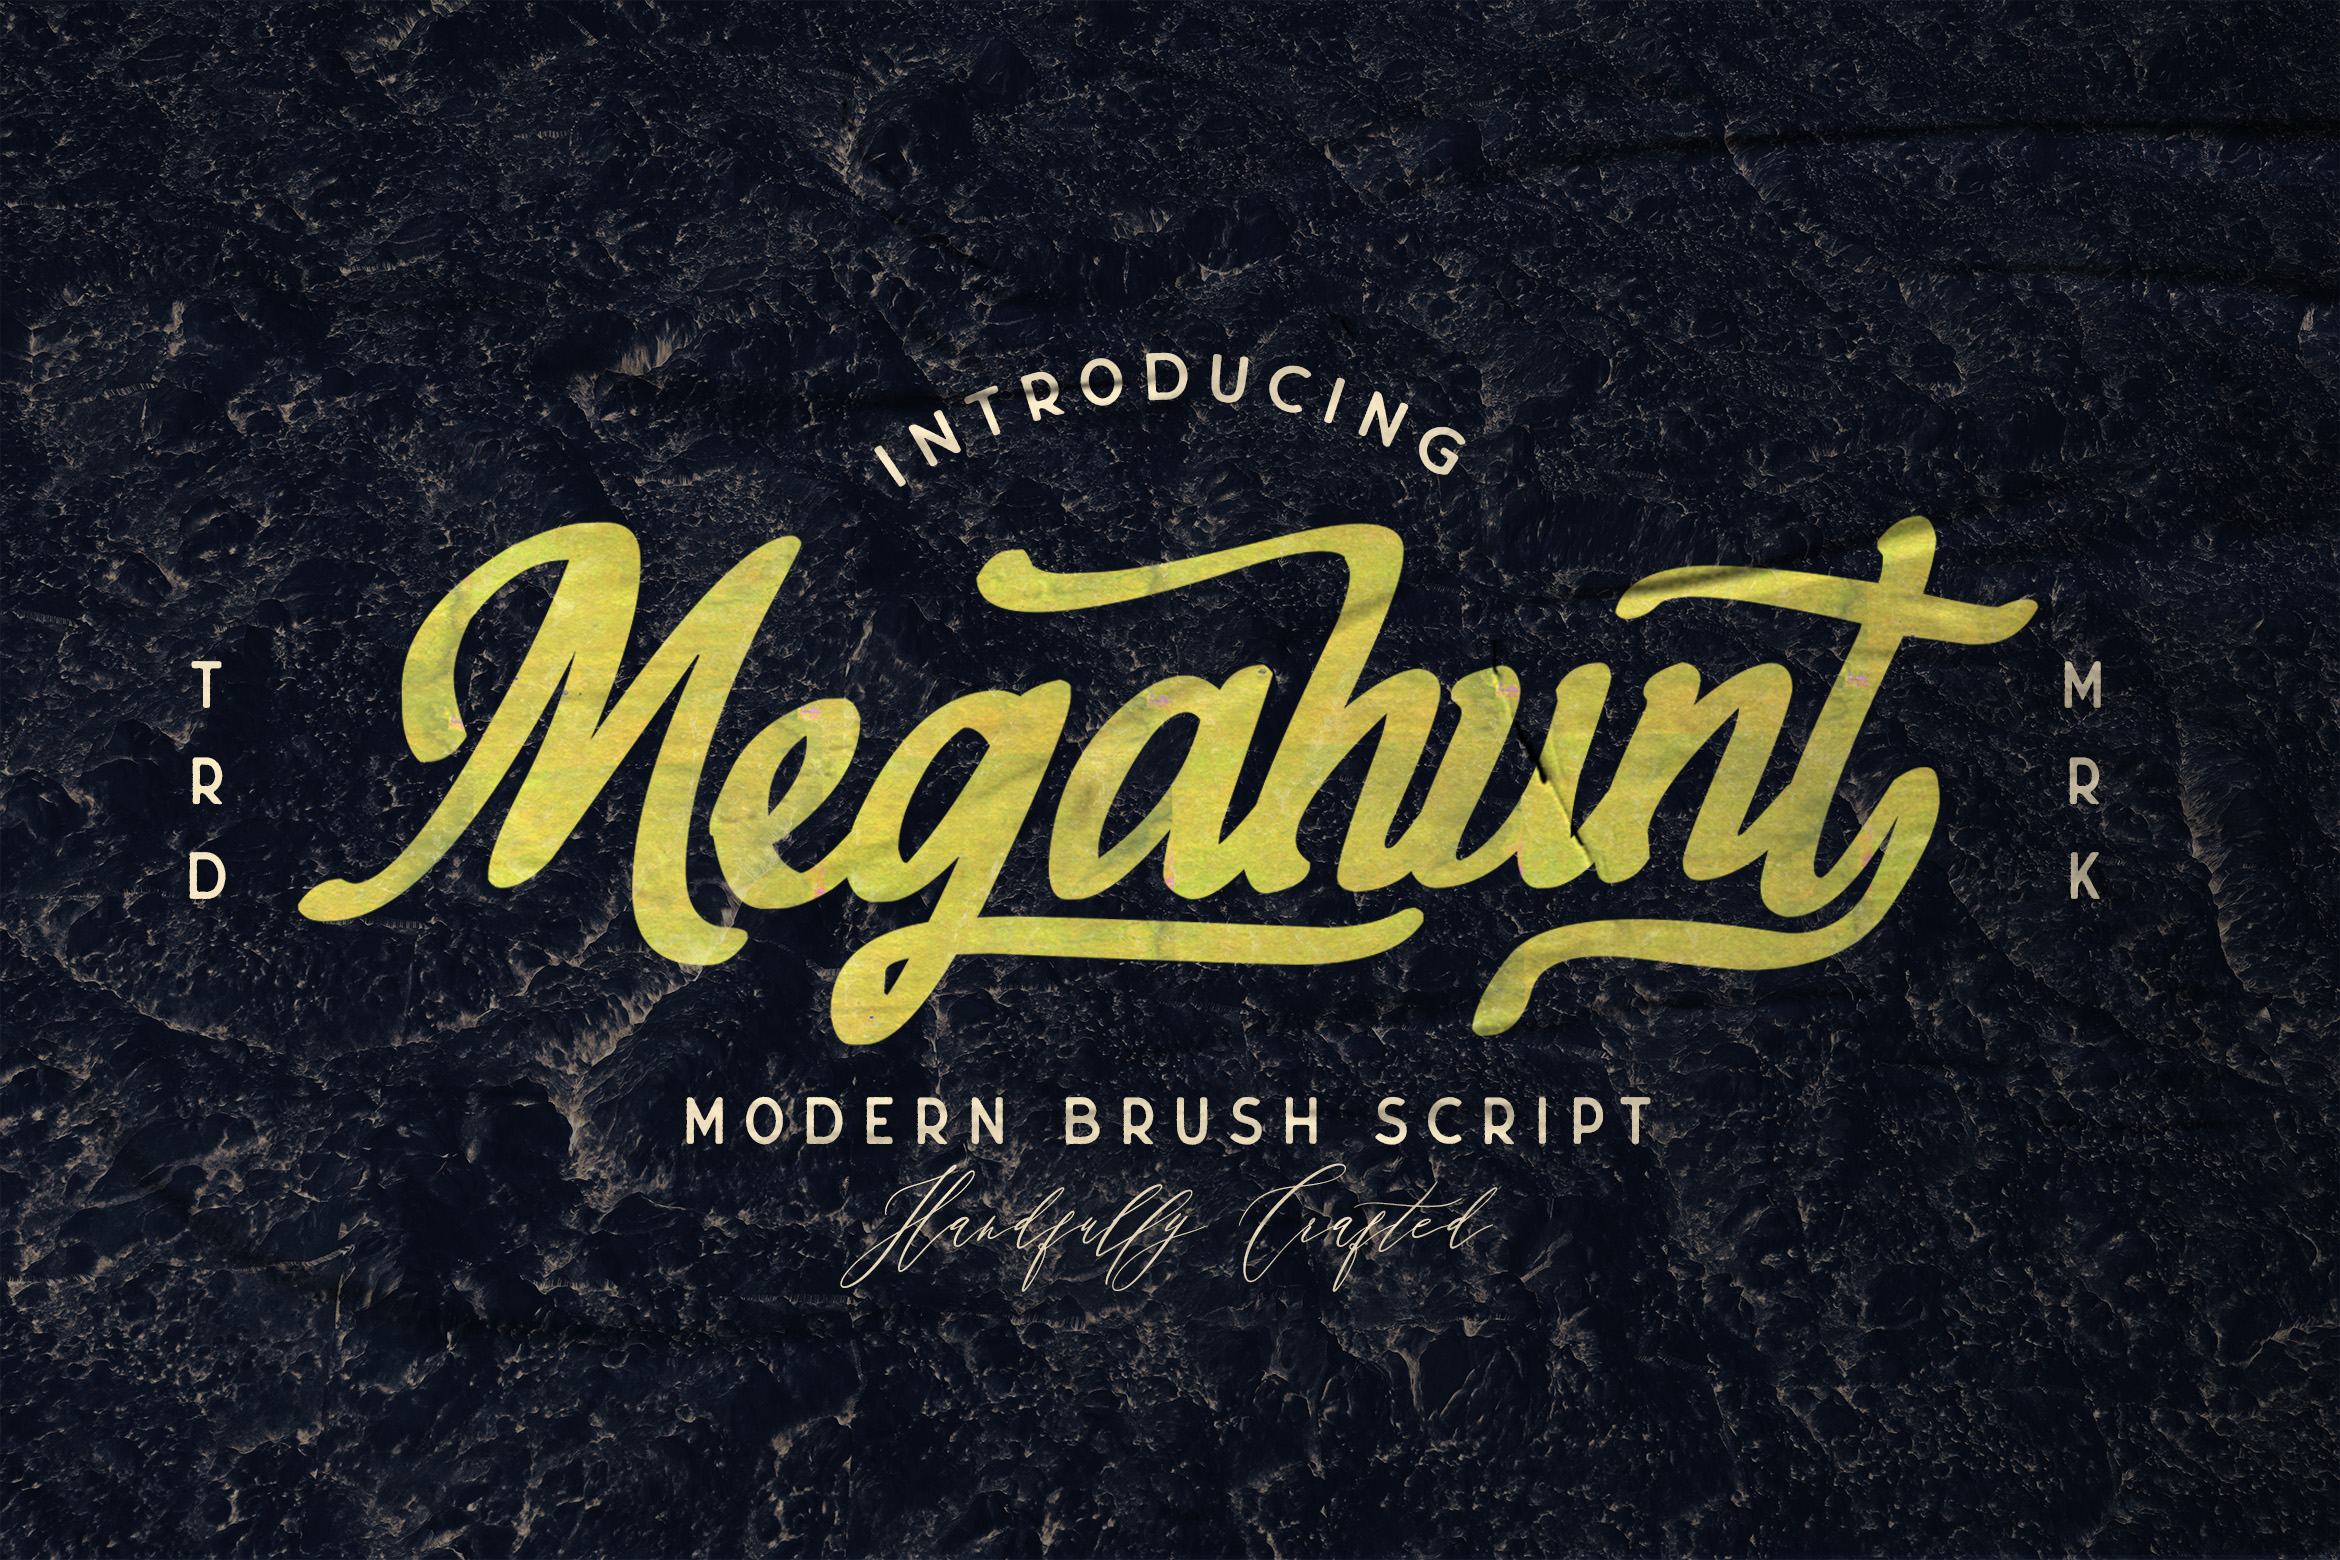 Megahunt Free Font